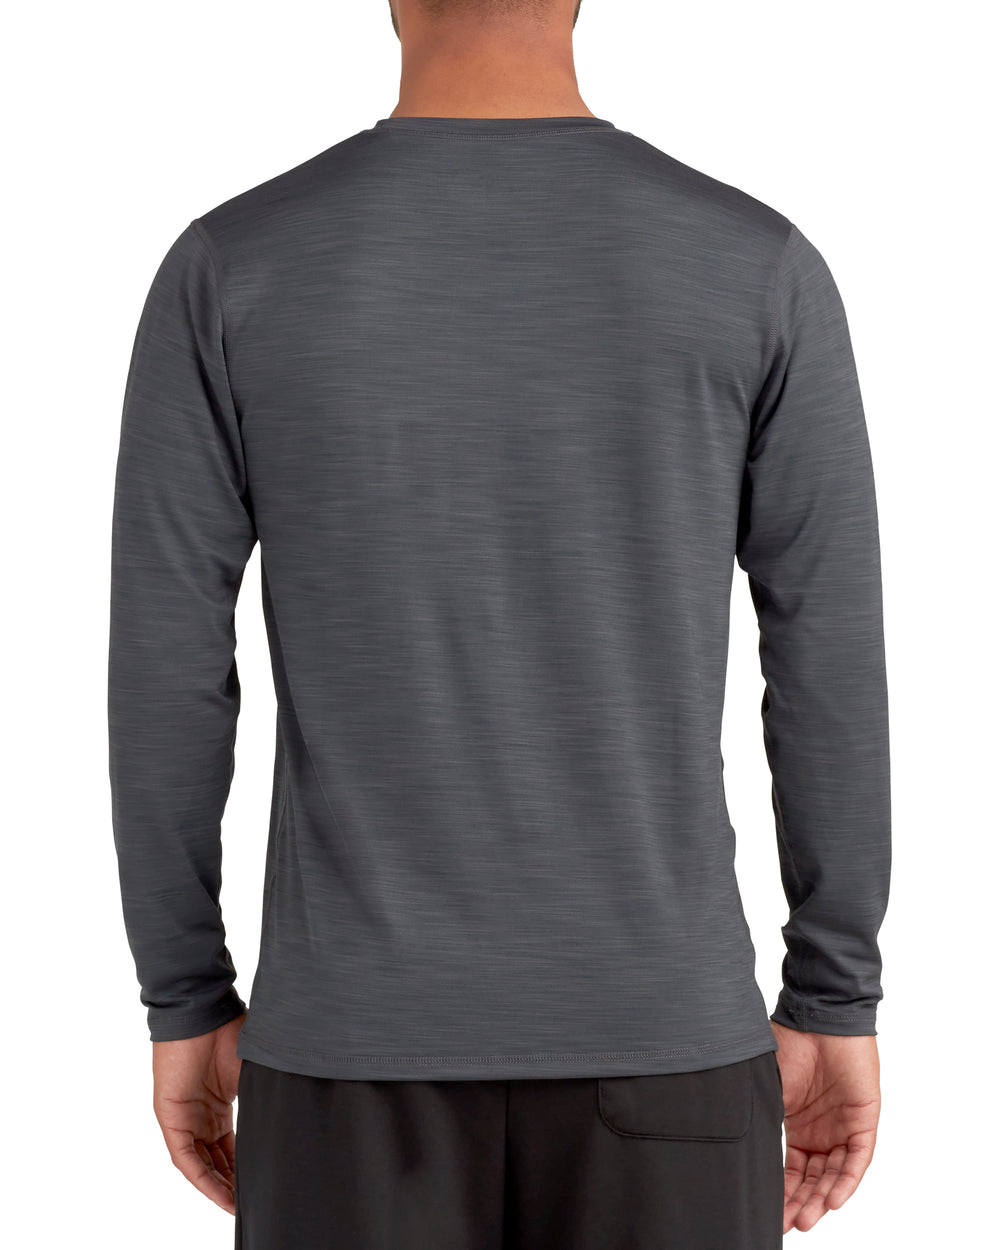 Offshore Pro UPF Long-Sleeve Shirt - Charcoal